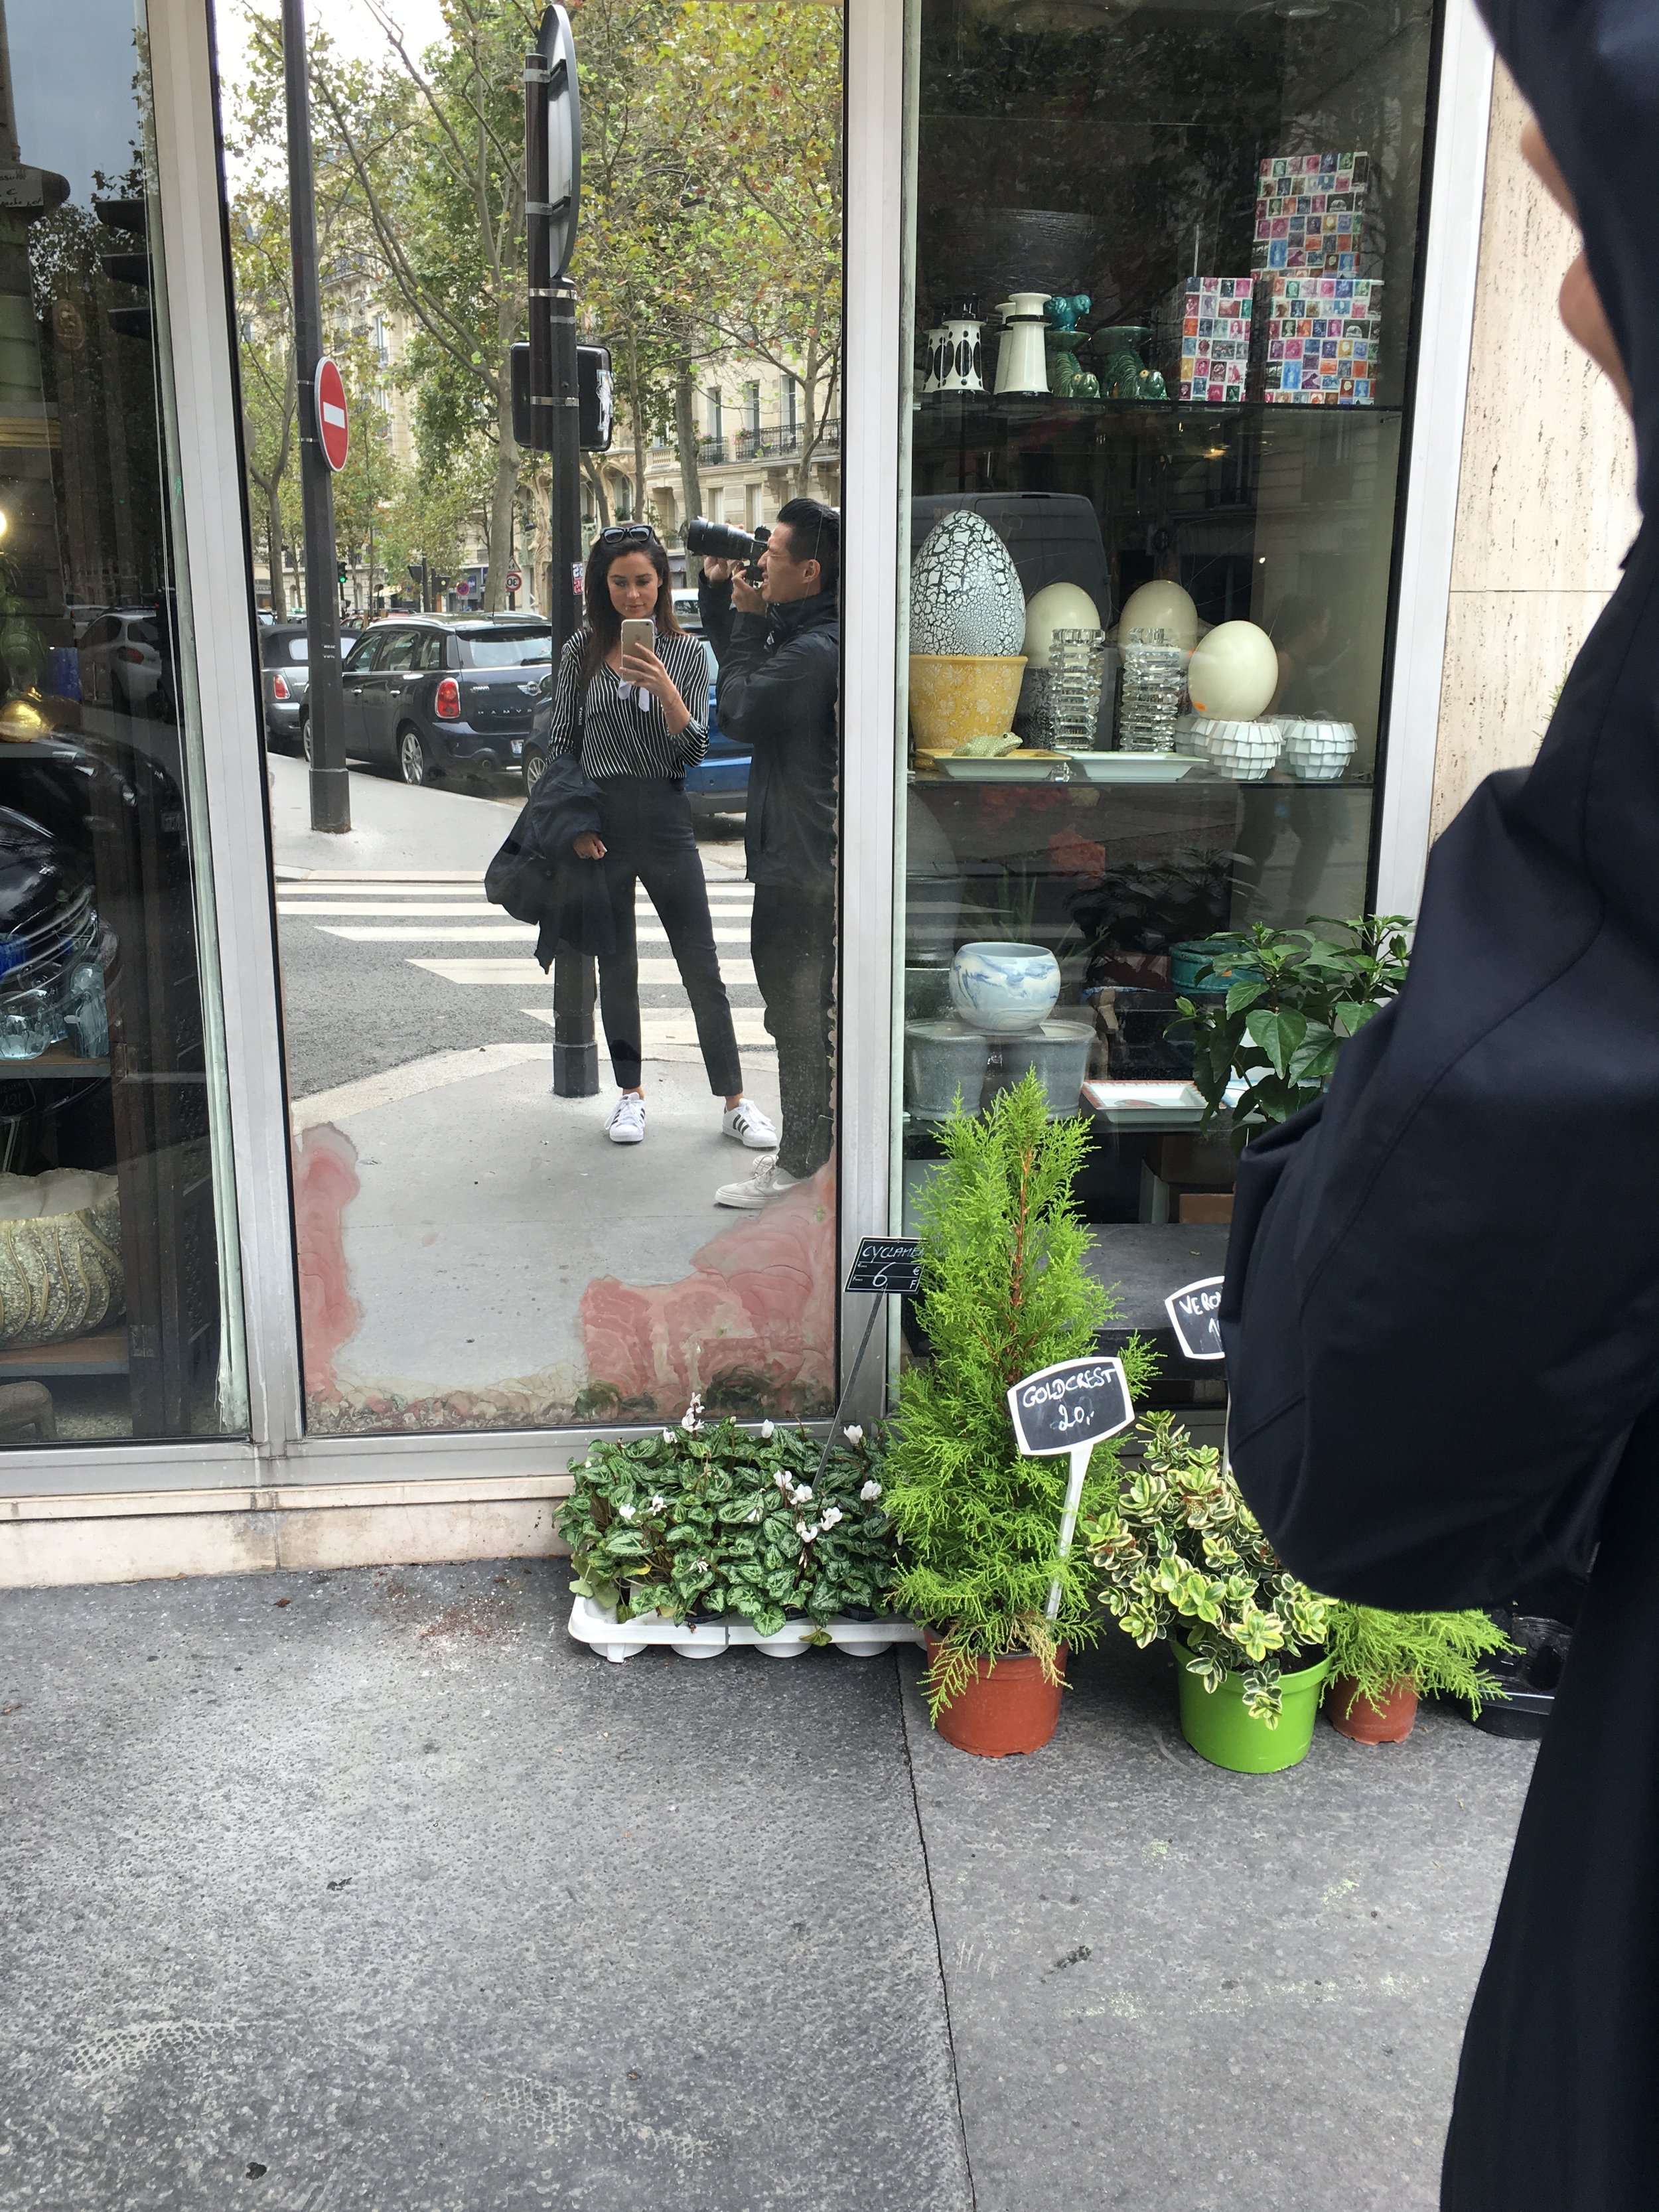 Mirror selfie by the eiffel tower